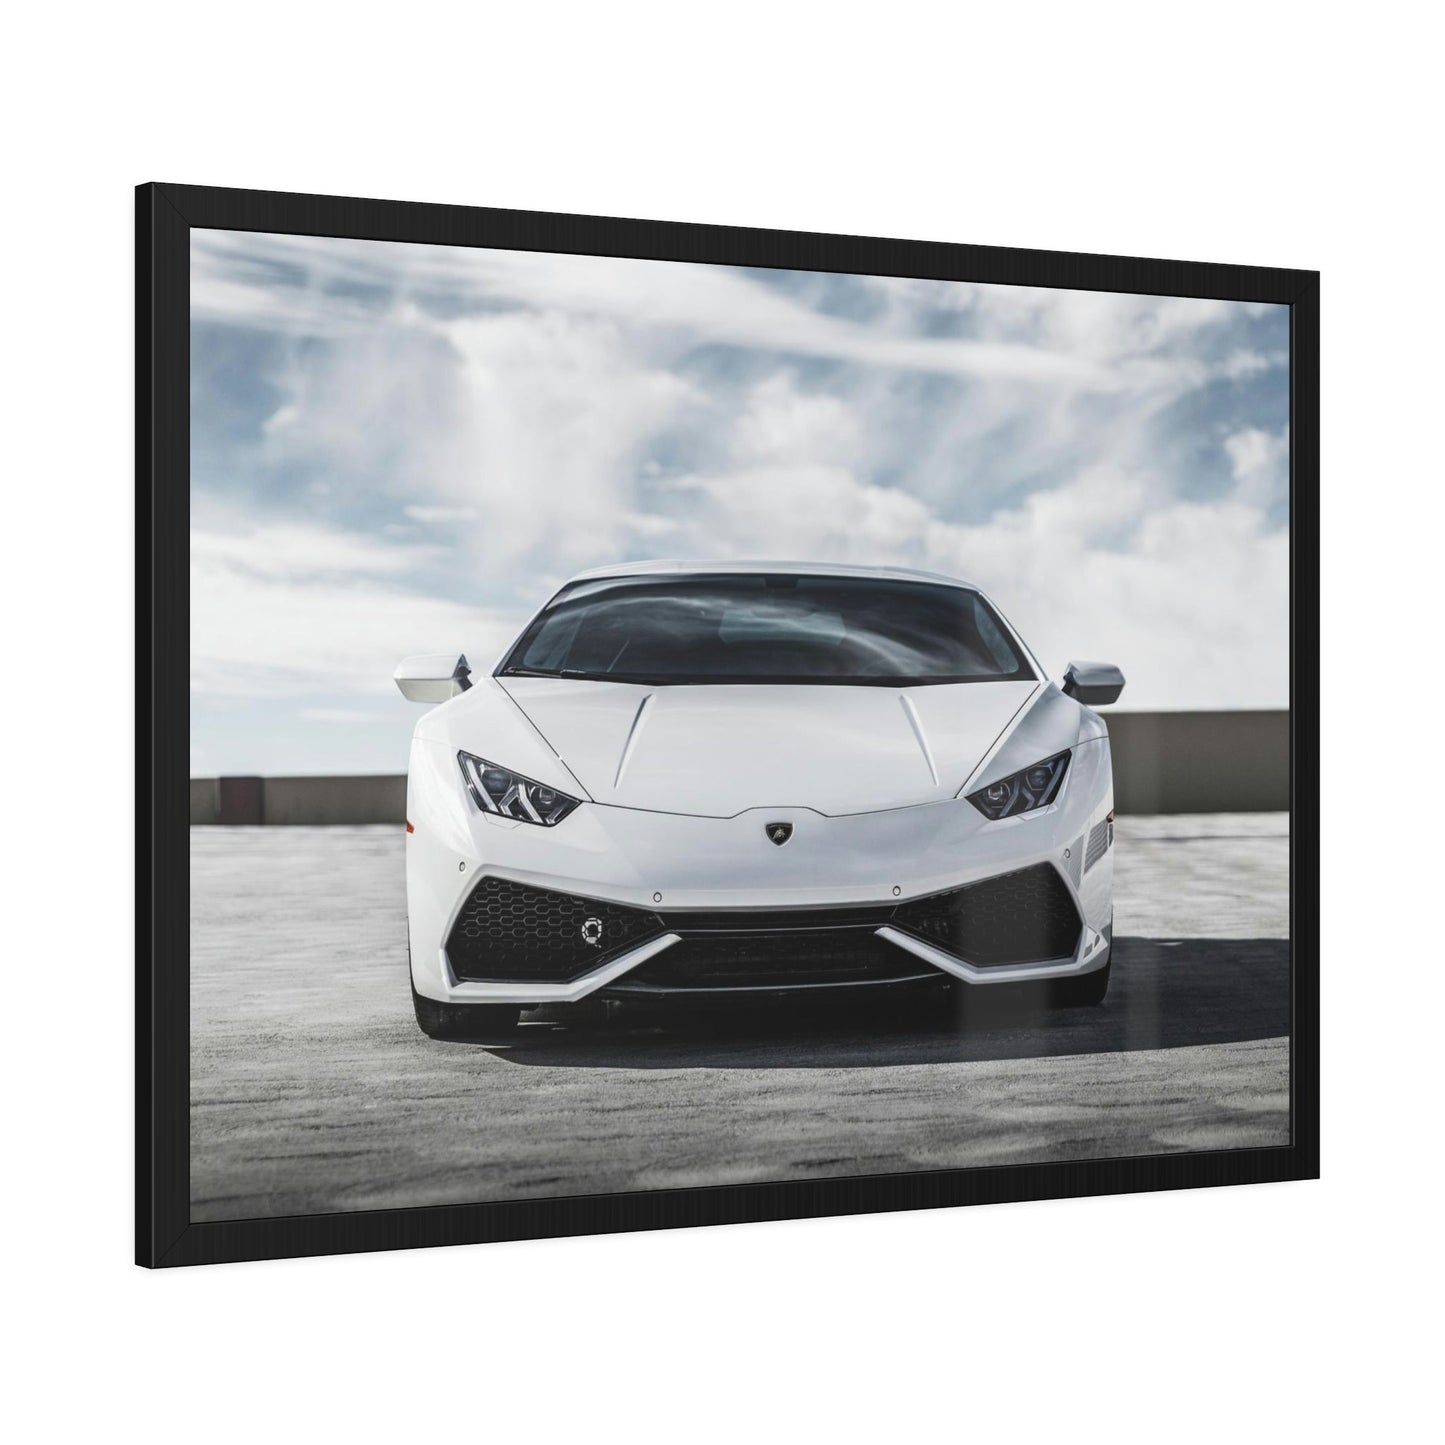 Luxury on Wheels: Lamborghini Canvas & Poster on a High-Quality Print